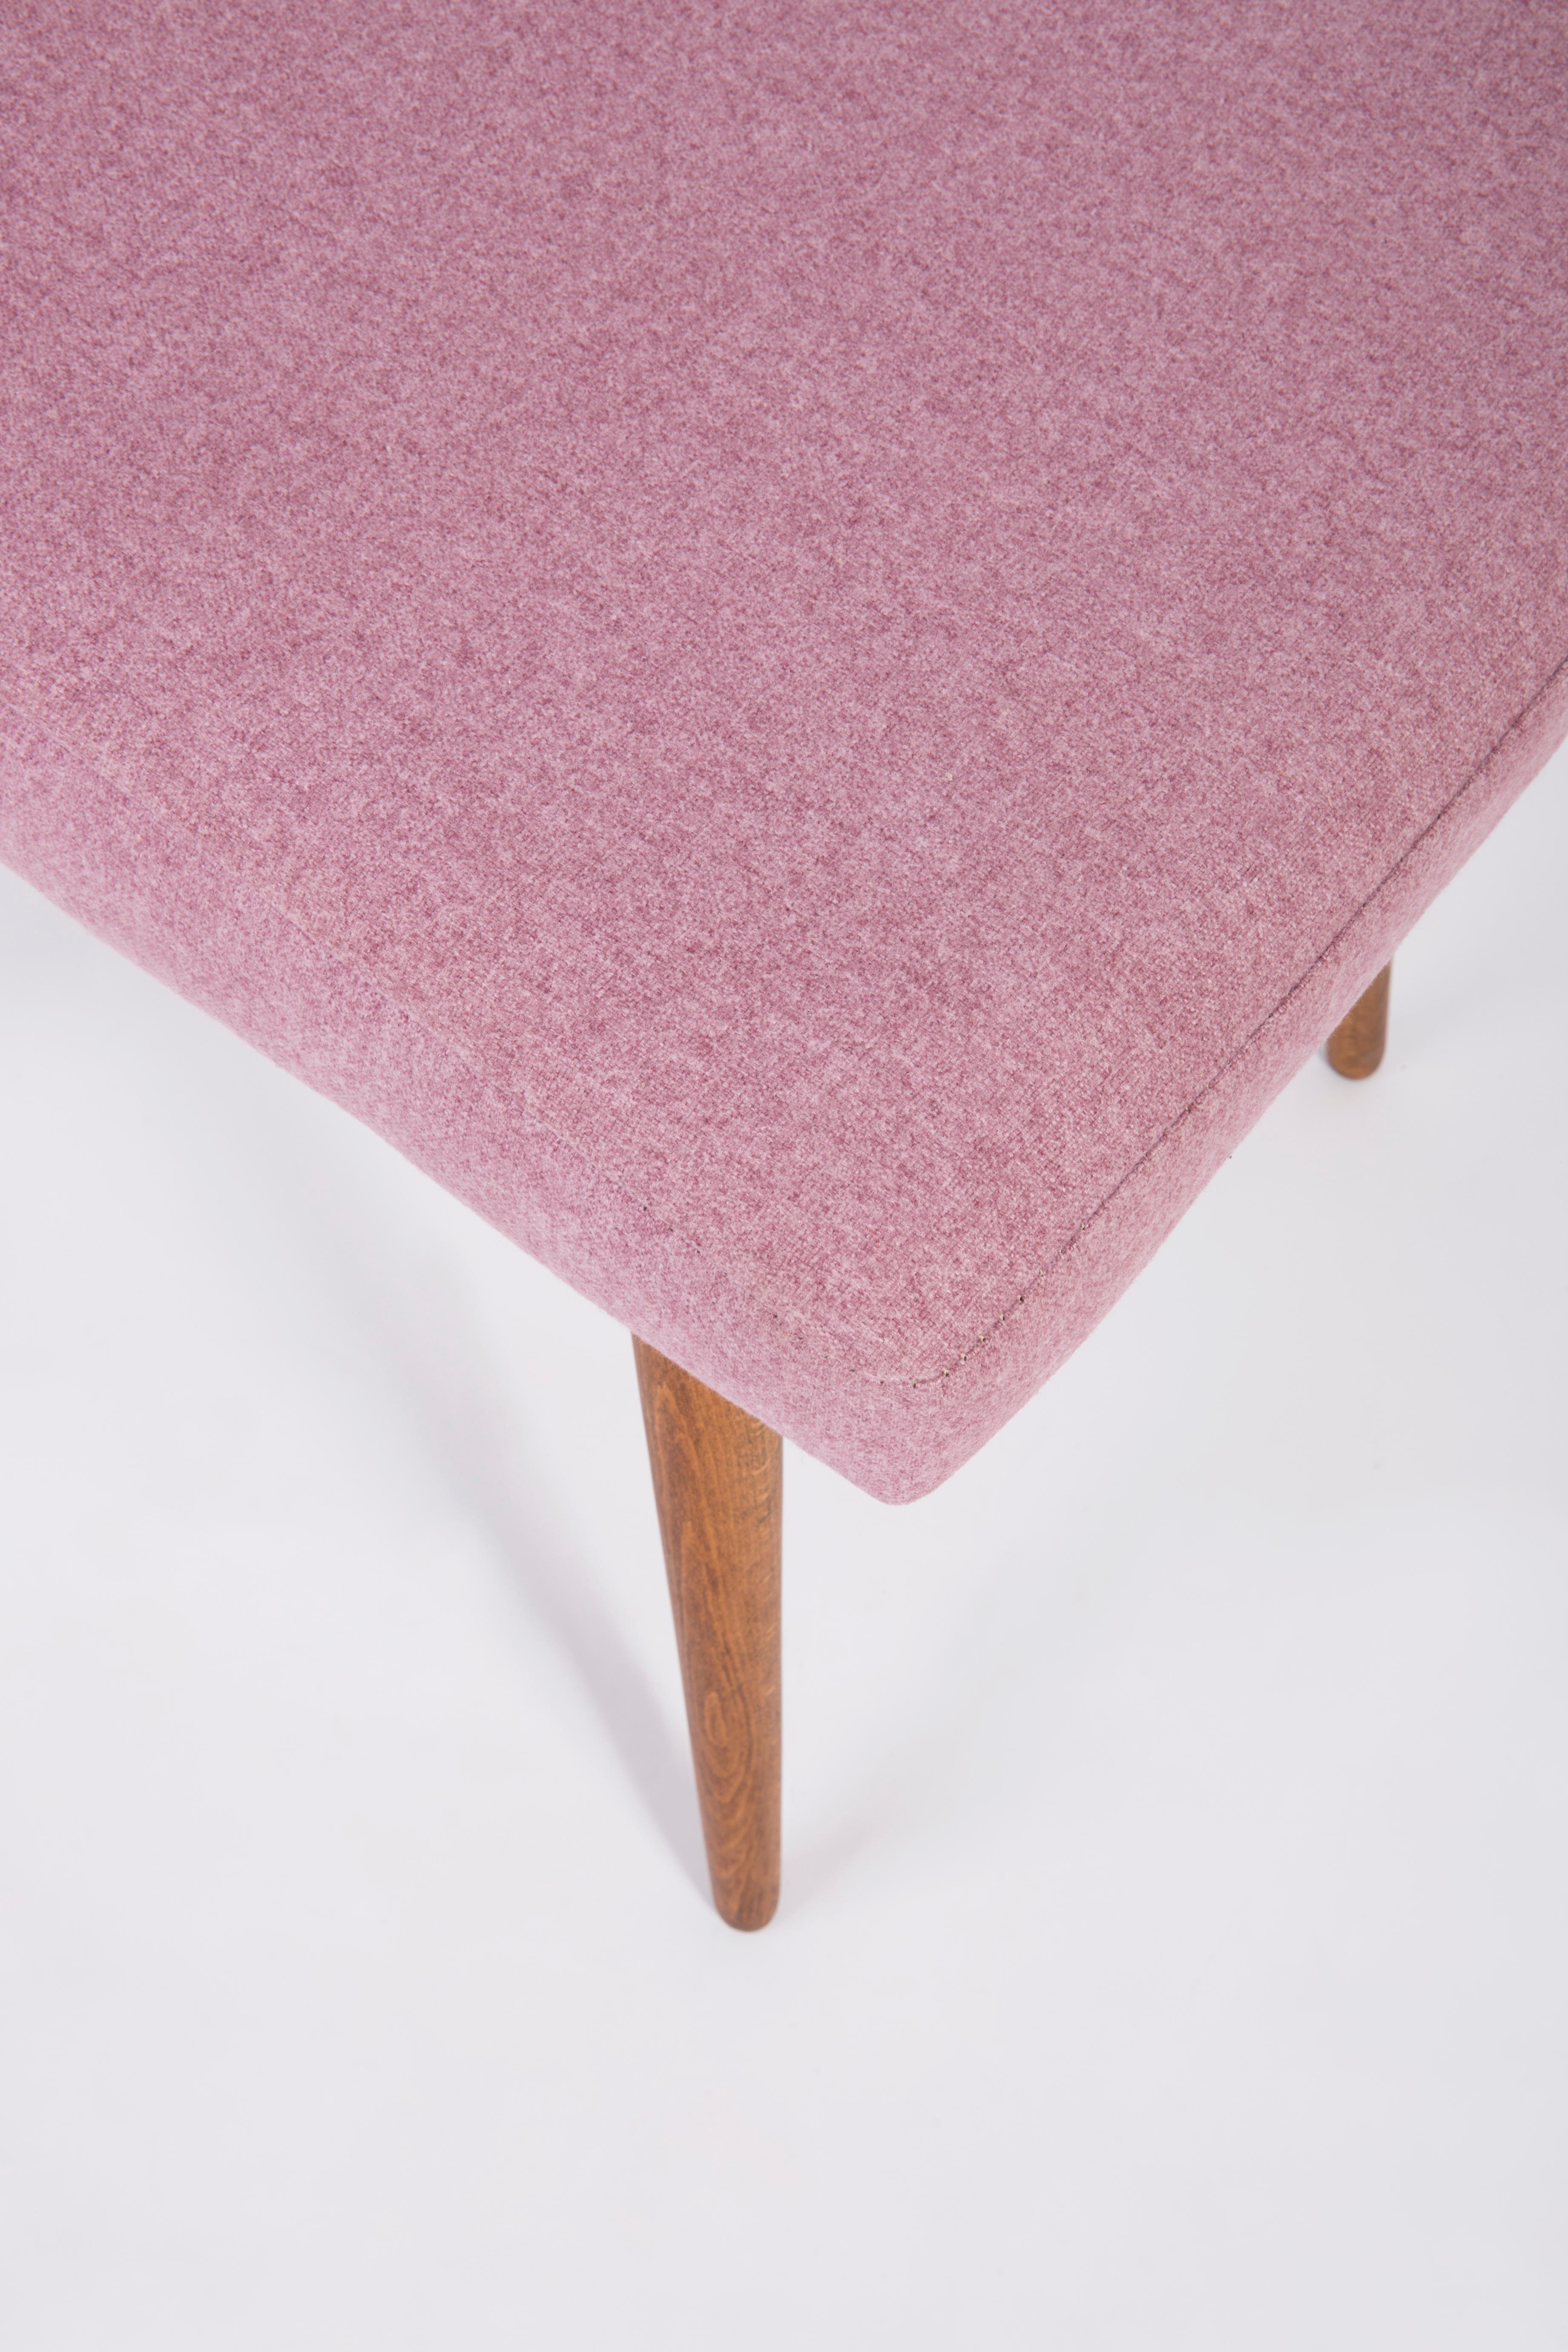 Textile Set of Two 20th Century Pink Mélange Rajmund Halas Chairs, 1960s For Sale